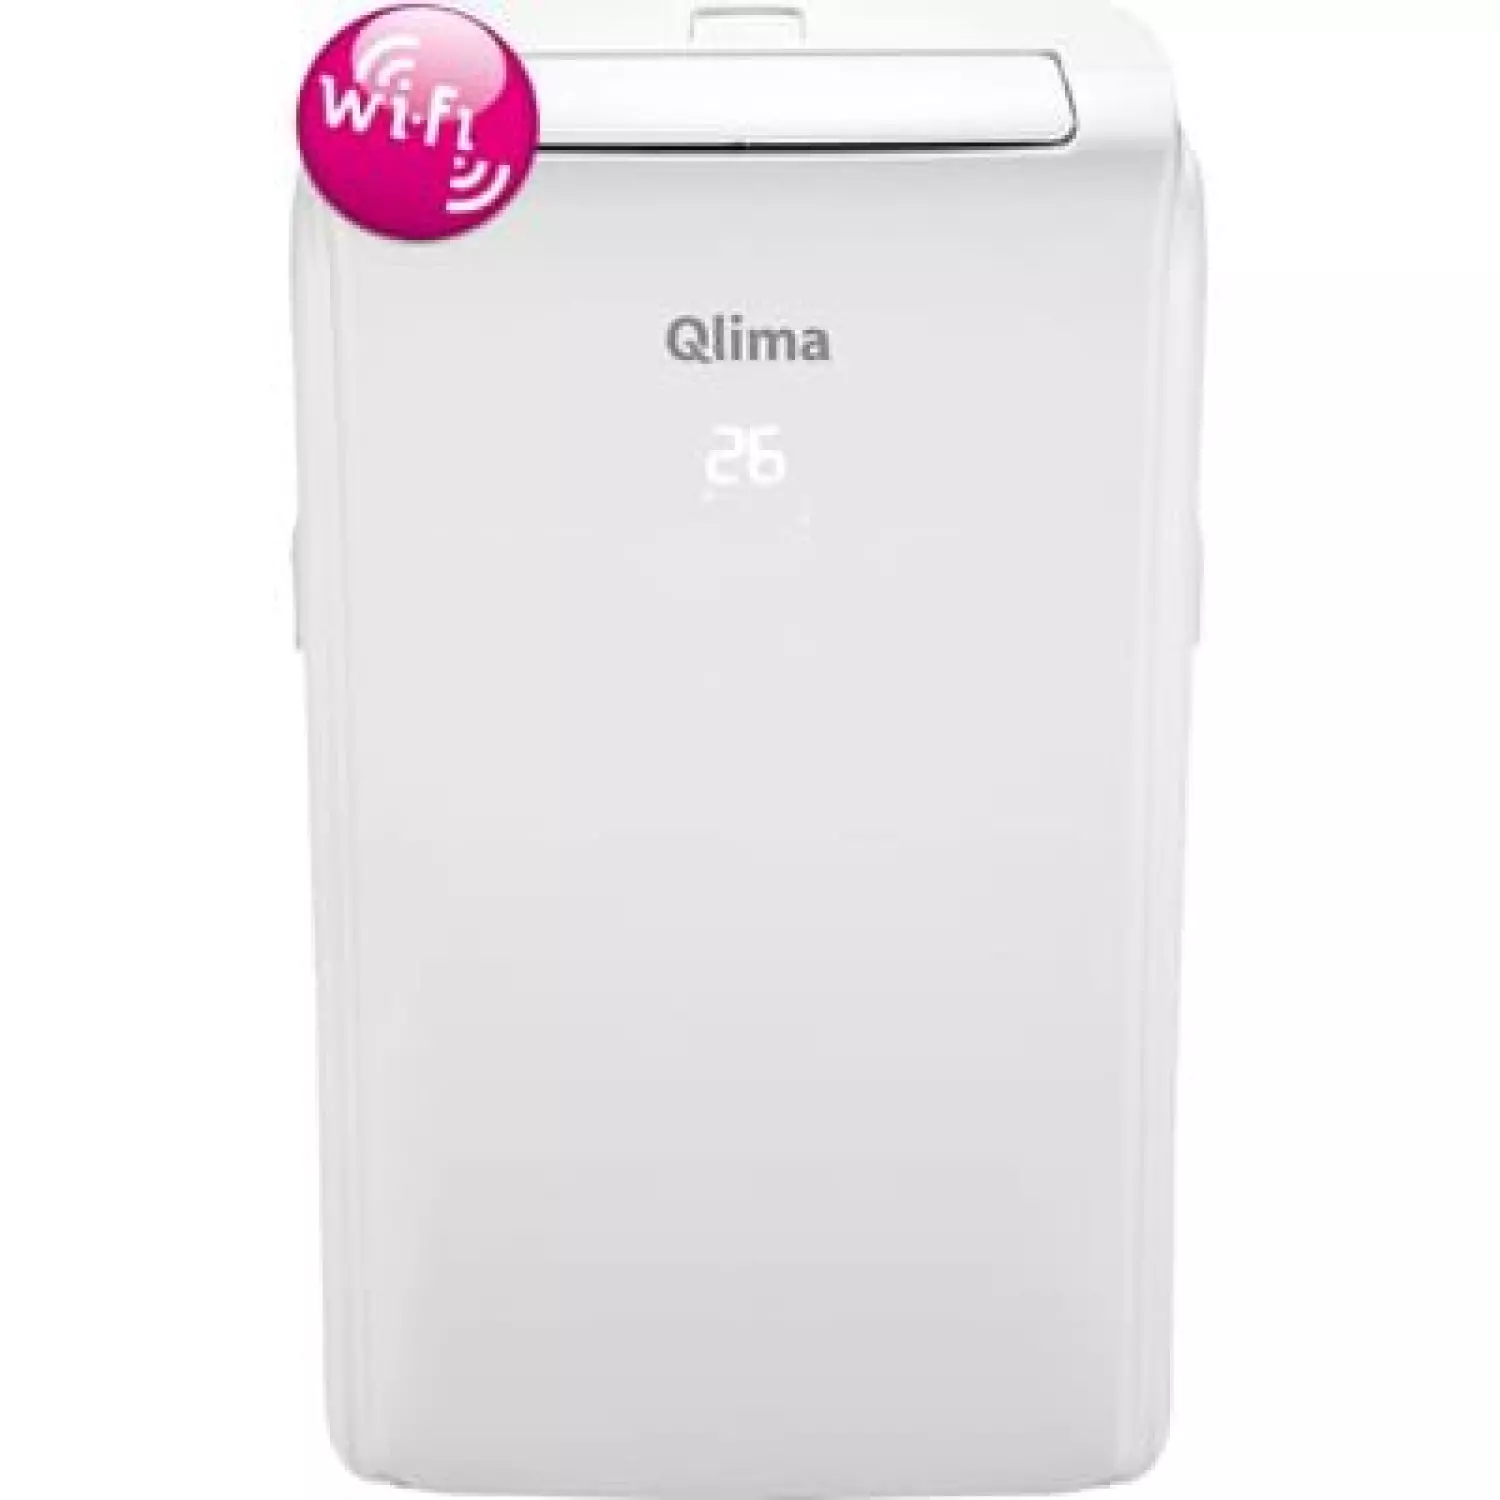 Climatiseur mobile Qlima PH 534 - 110m3